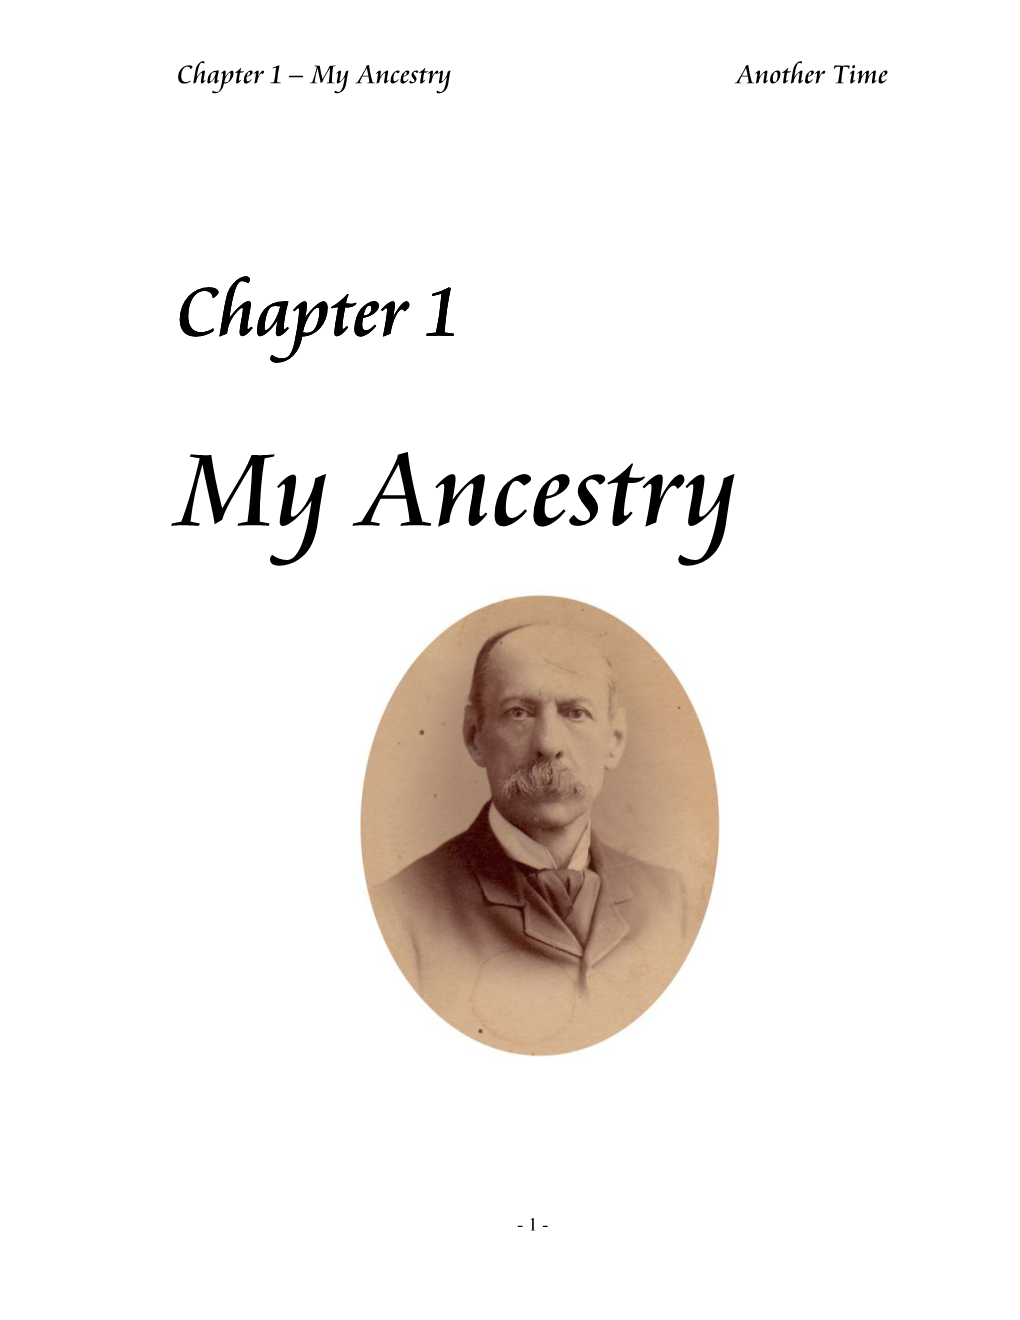 1. My Ancestry